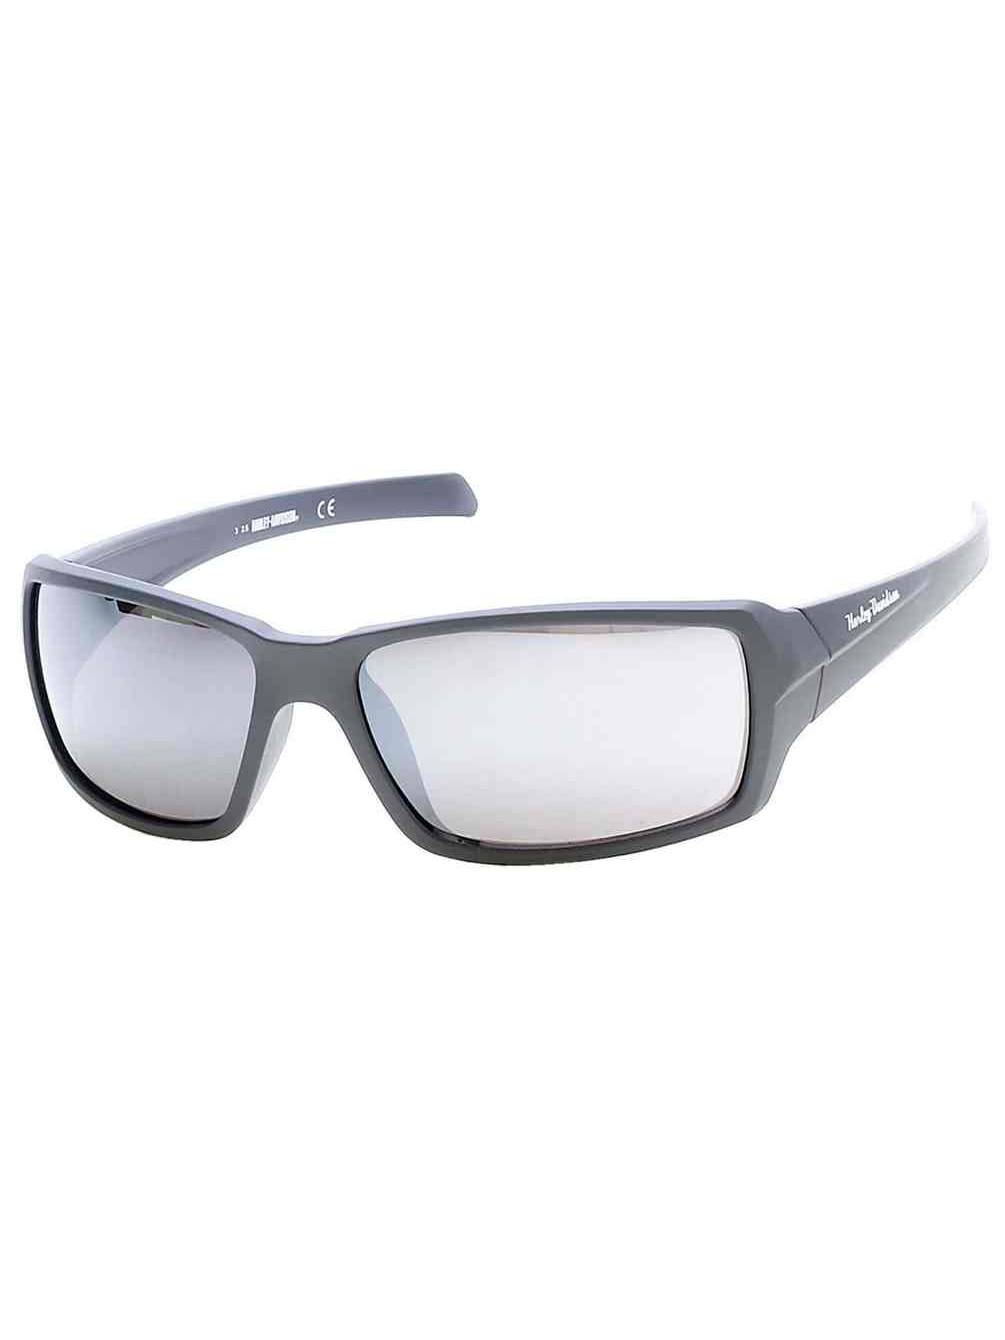 Harley-Davidson Men's Rectangle H-D Sunglasses, Gray Frame & Smoke Gray Lens, Harley Davidson - image 1 of 8